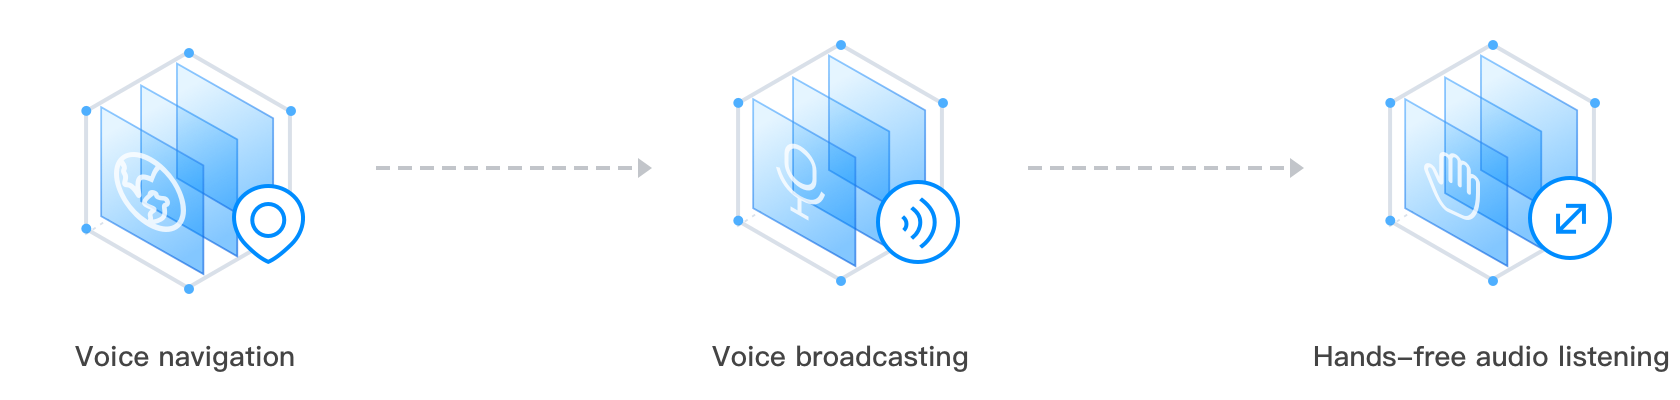 Voice Broadcasting